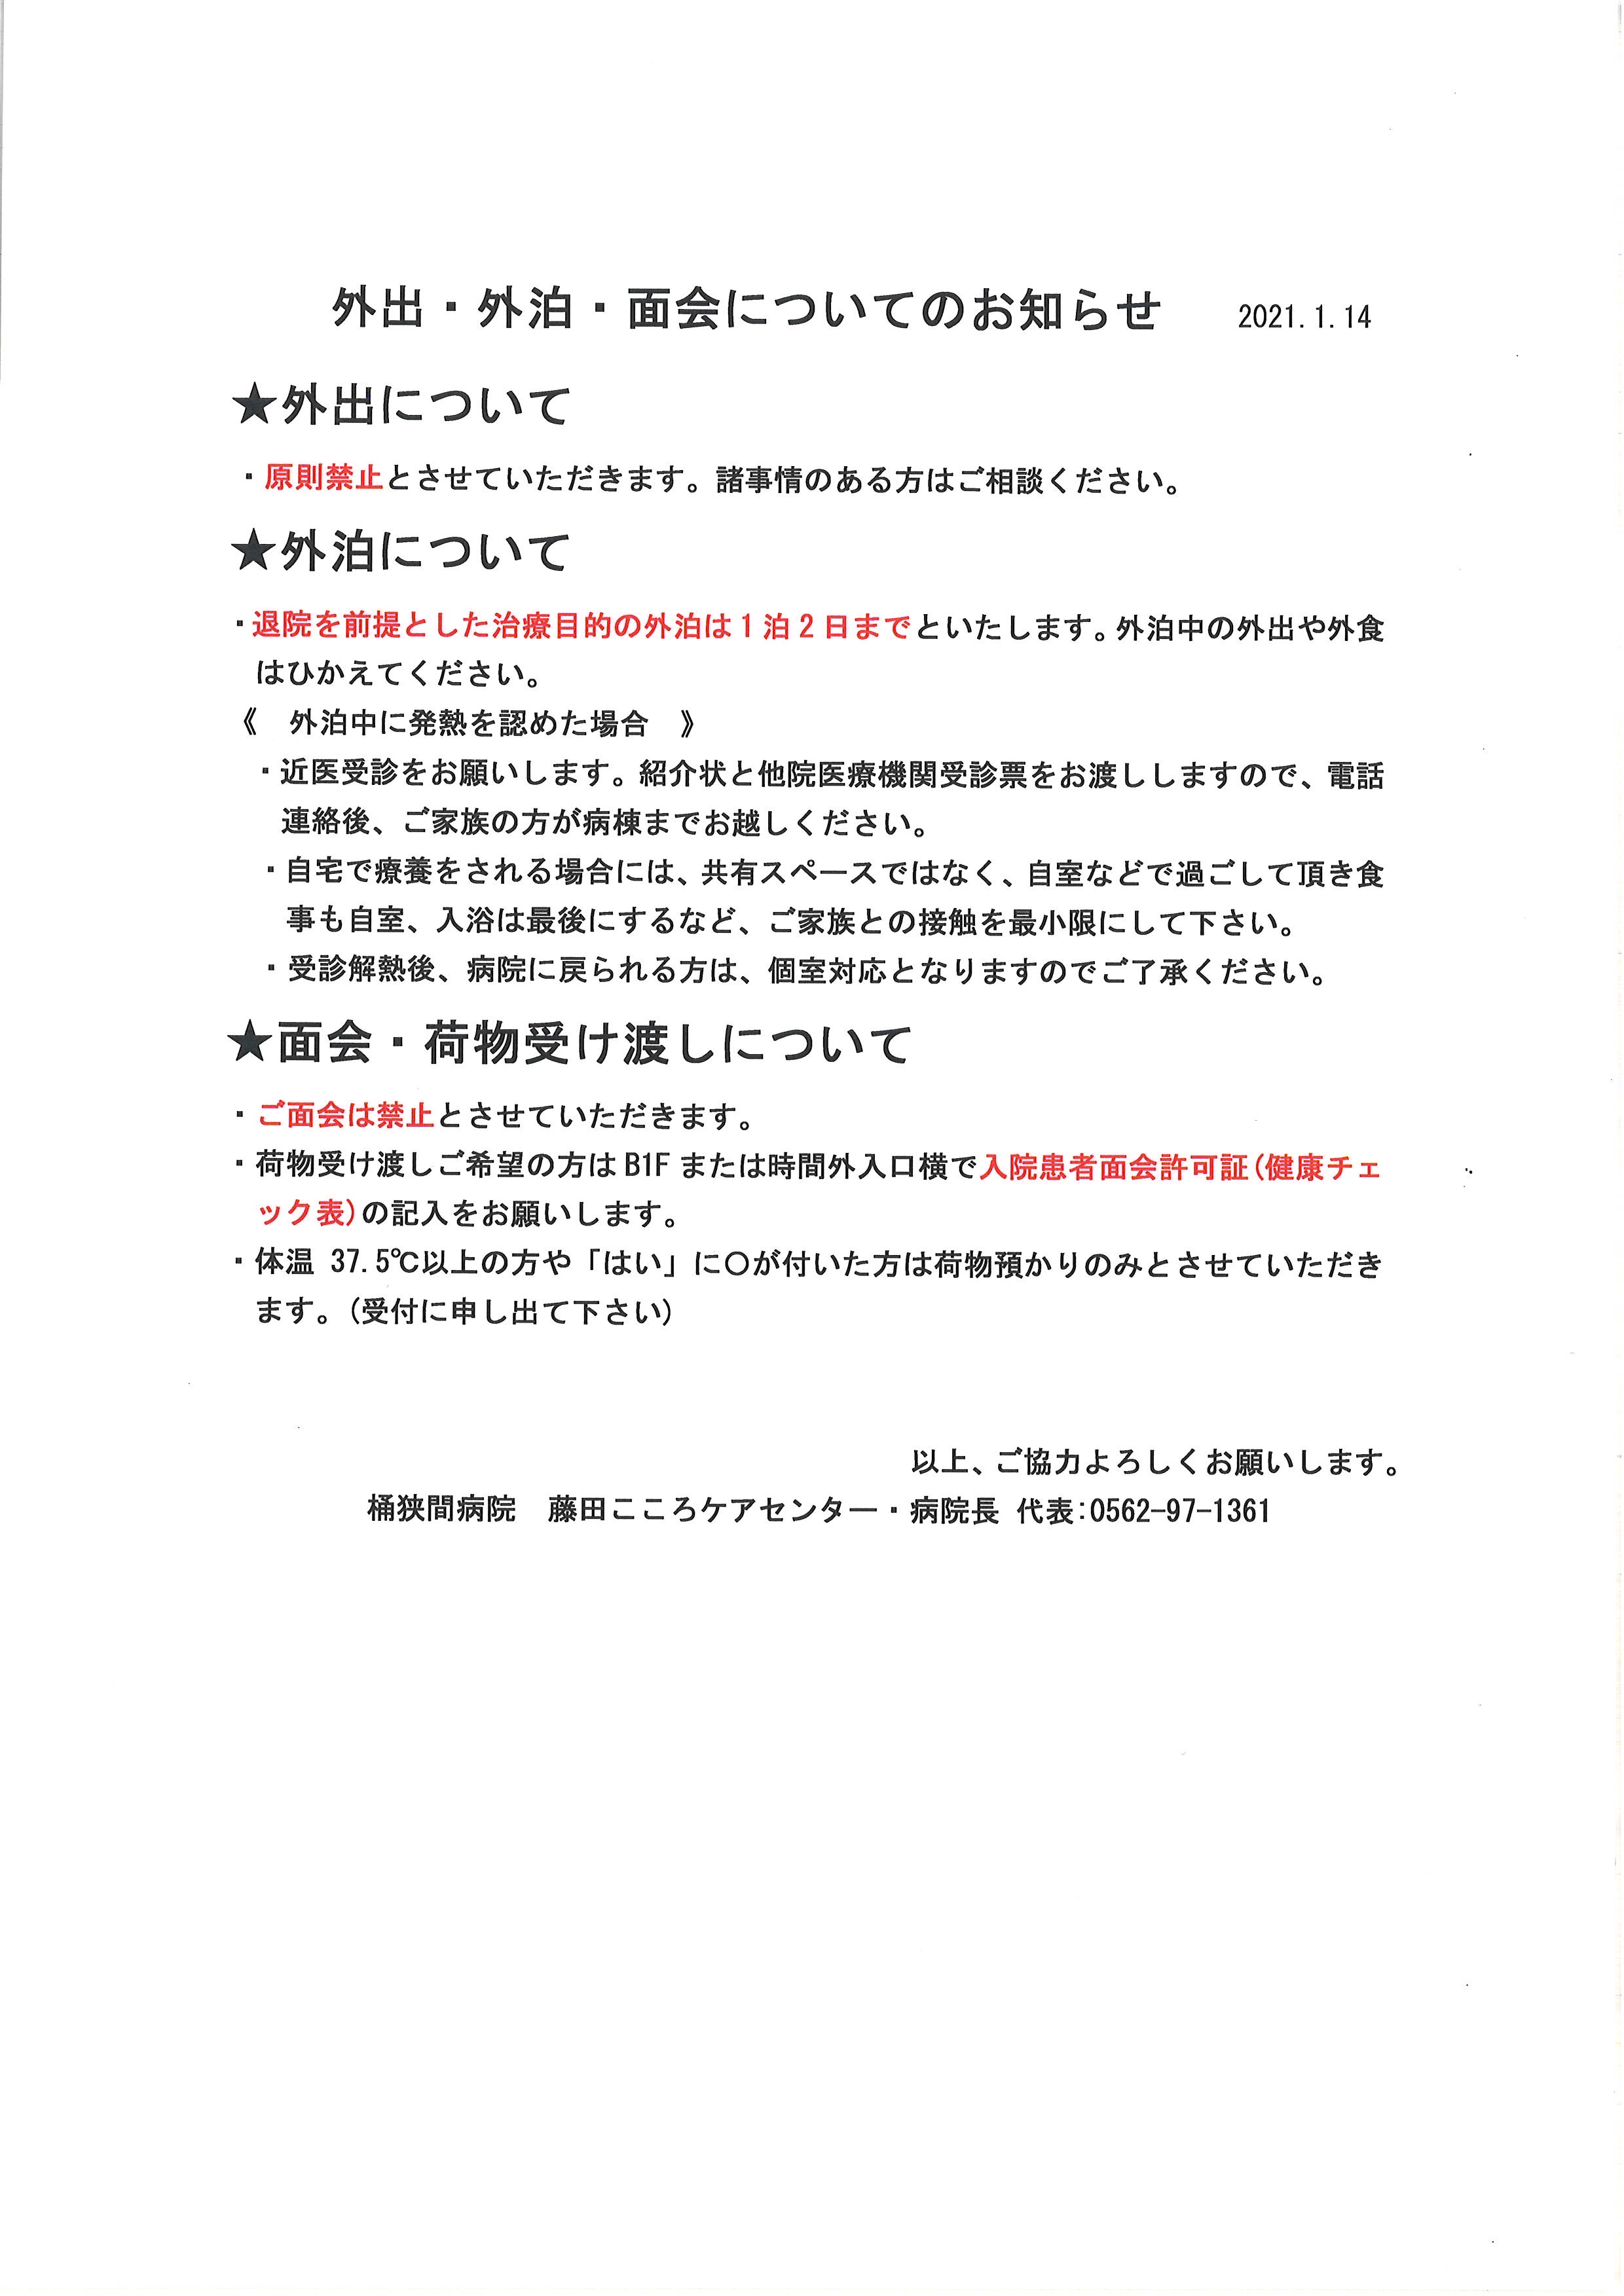 https://www.seishinkai-kokoro.jp/news/%E5%A4%96%E5%87%BA%E9%9D%A2%E4%BC%9A%E5%88%B6%E9%99%9020210114.jpg